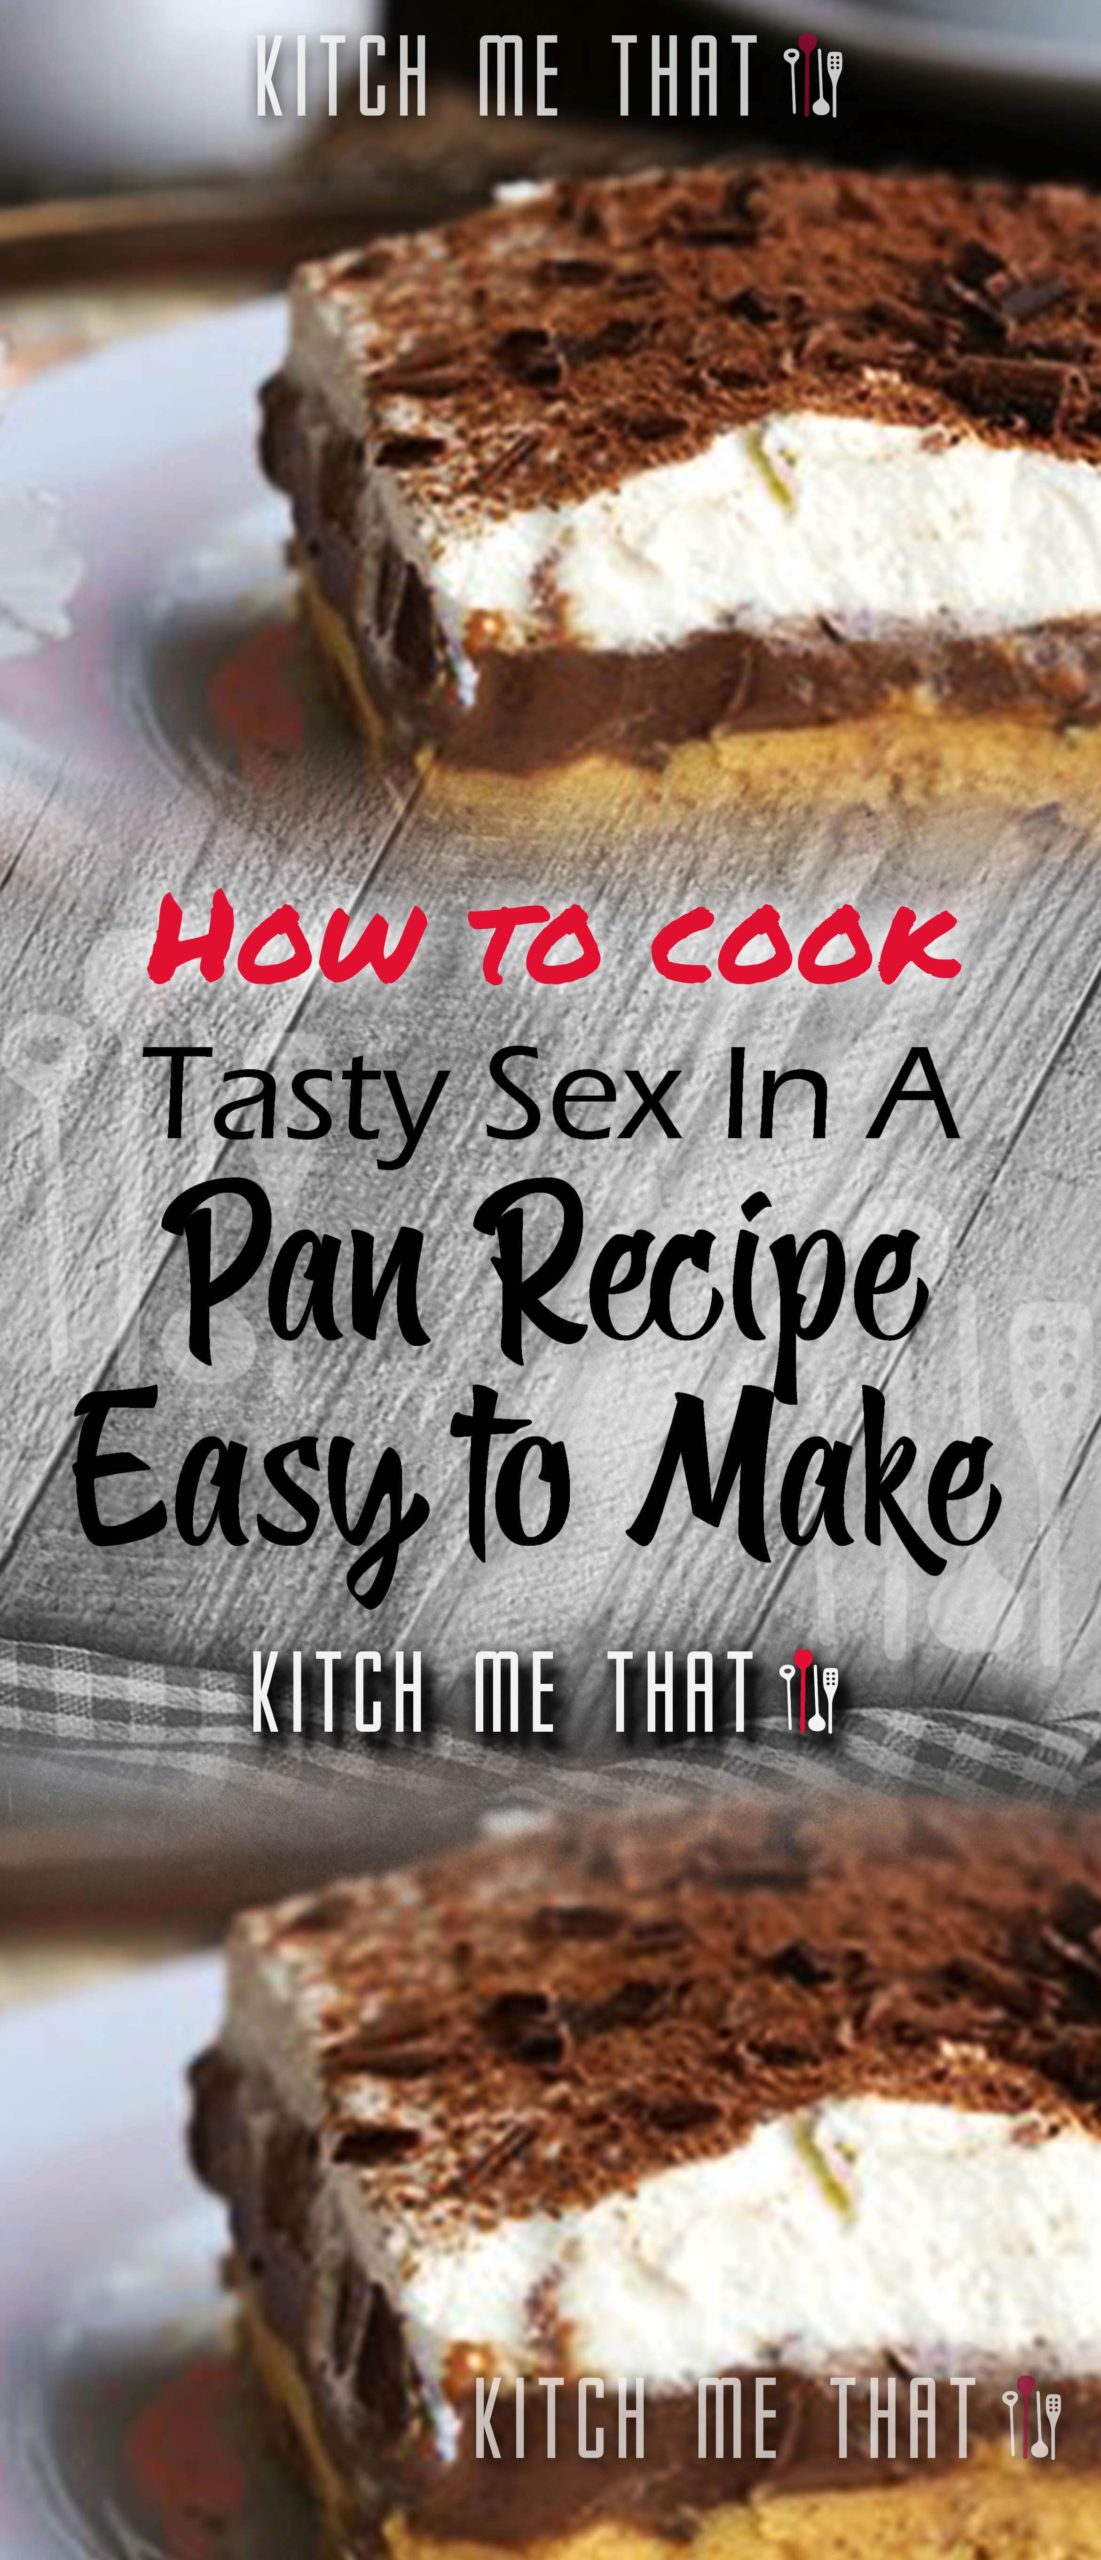 Tasty Sex In A Pan Recipe